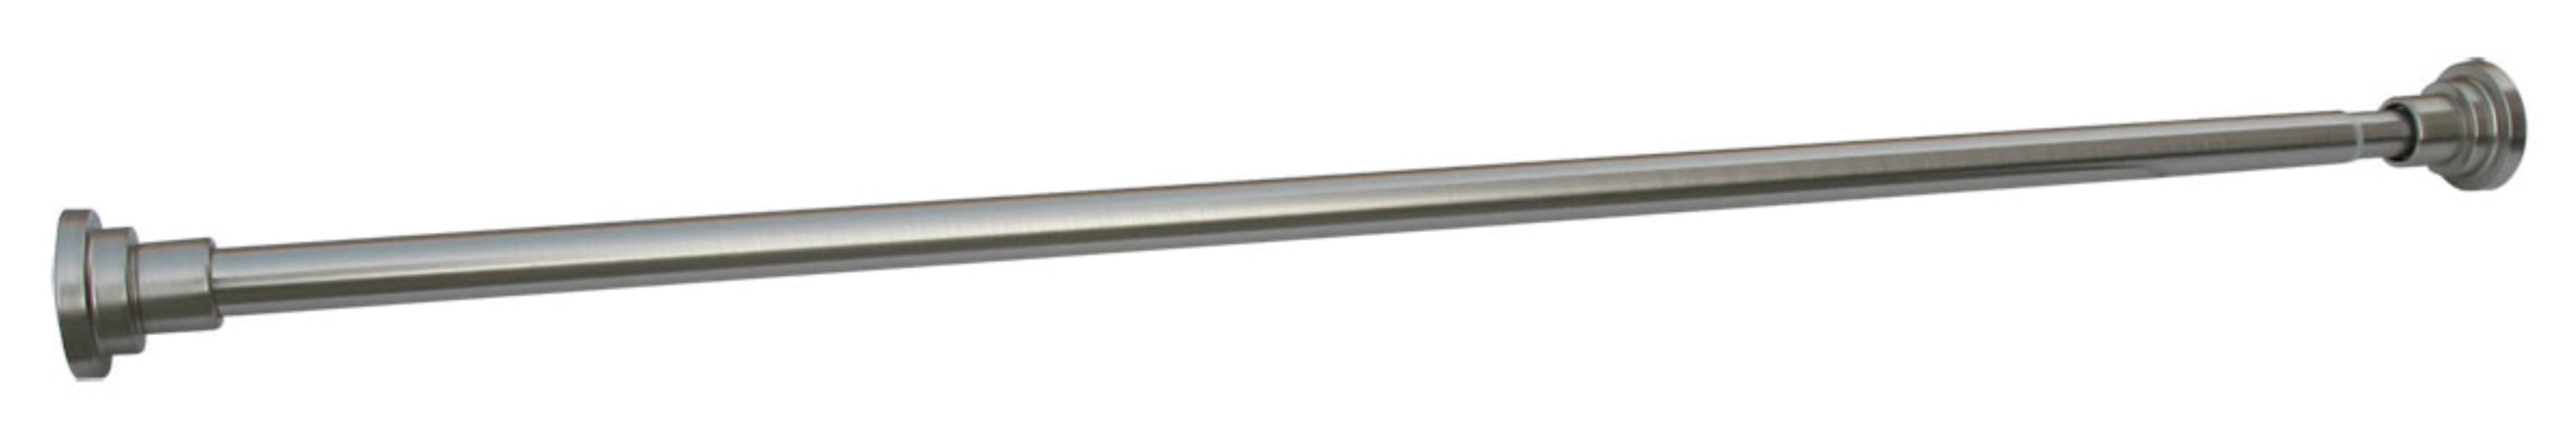 Adjustable Shower Rod, Satin Nickel